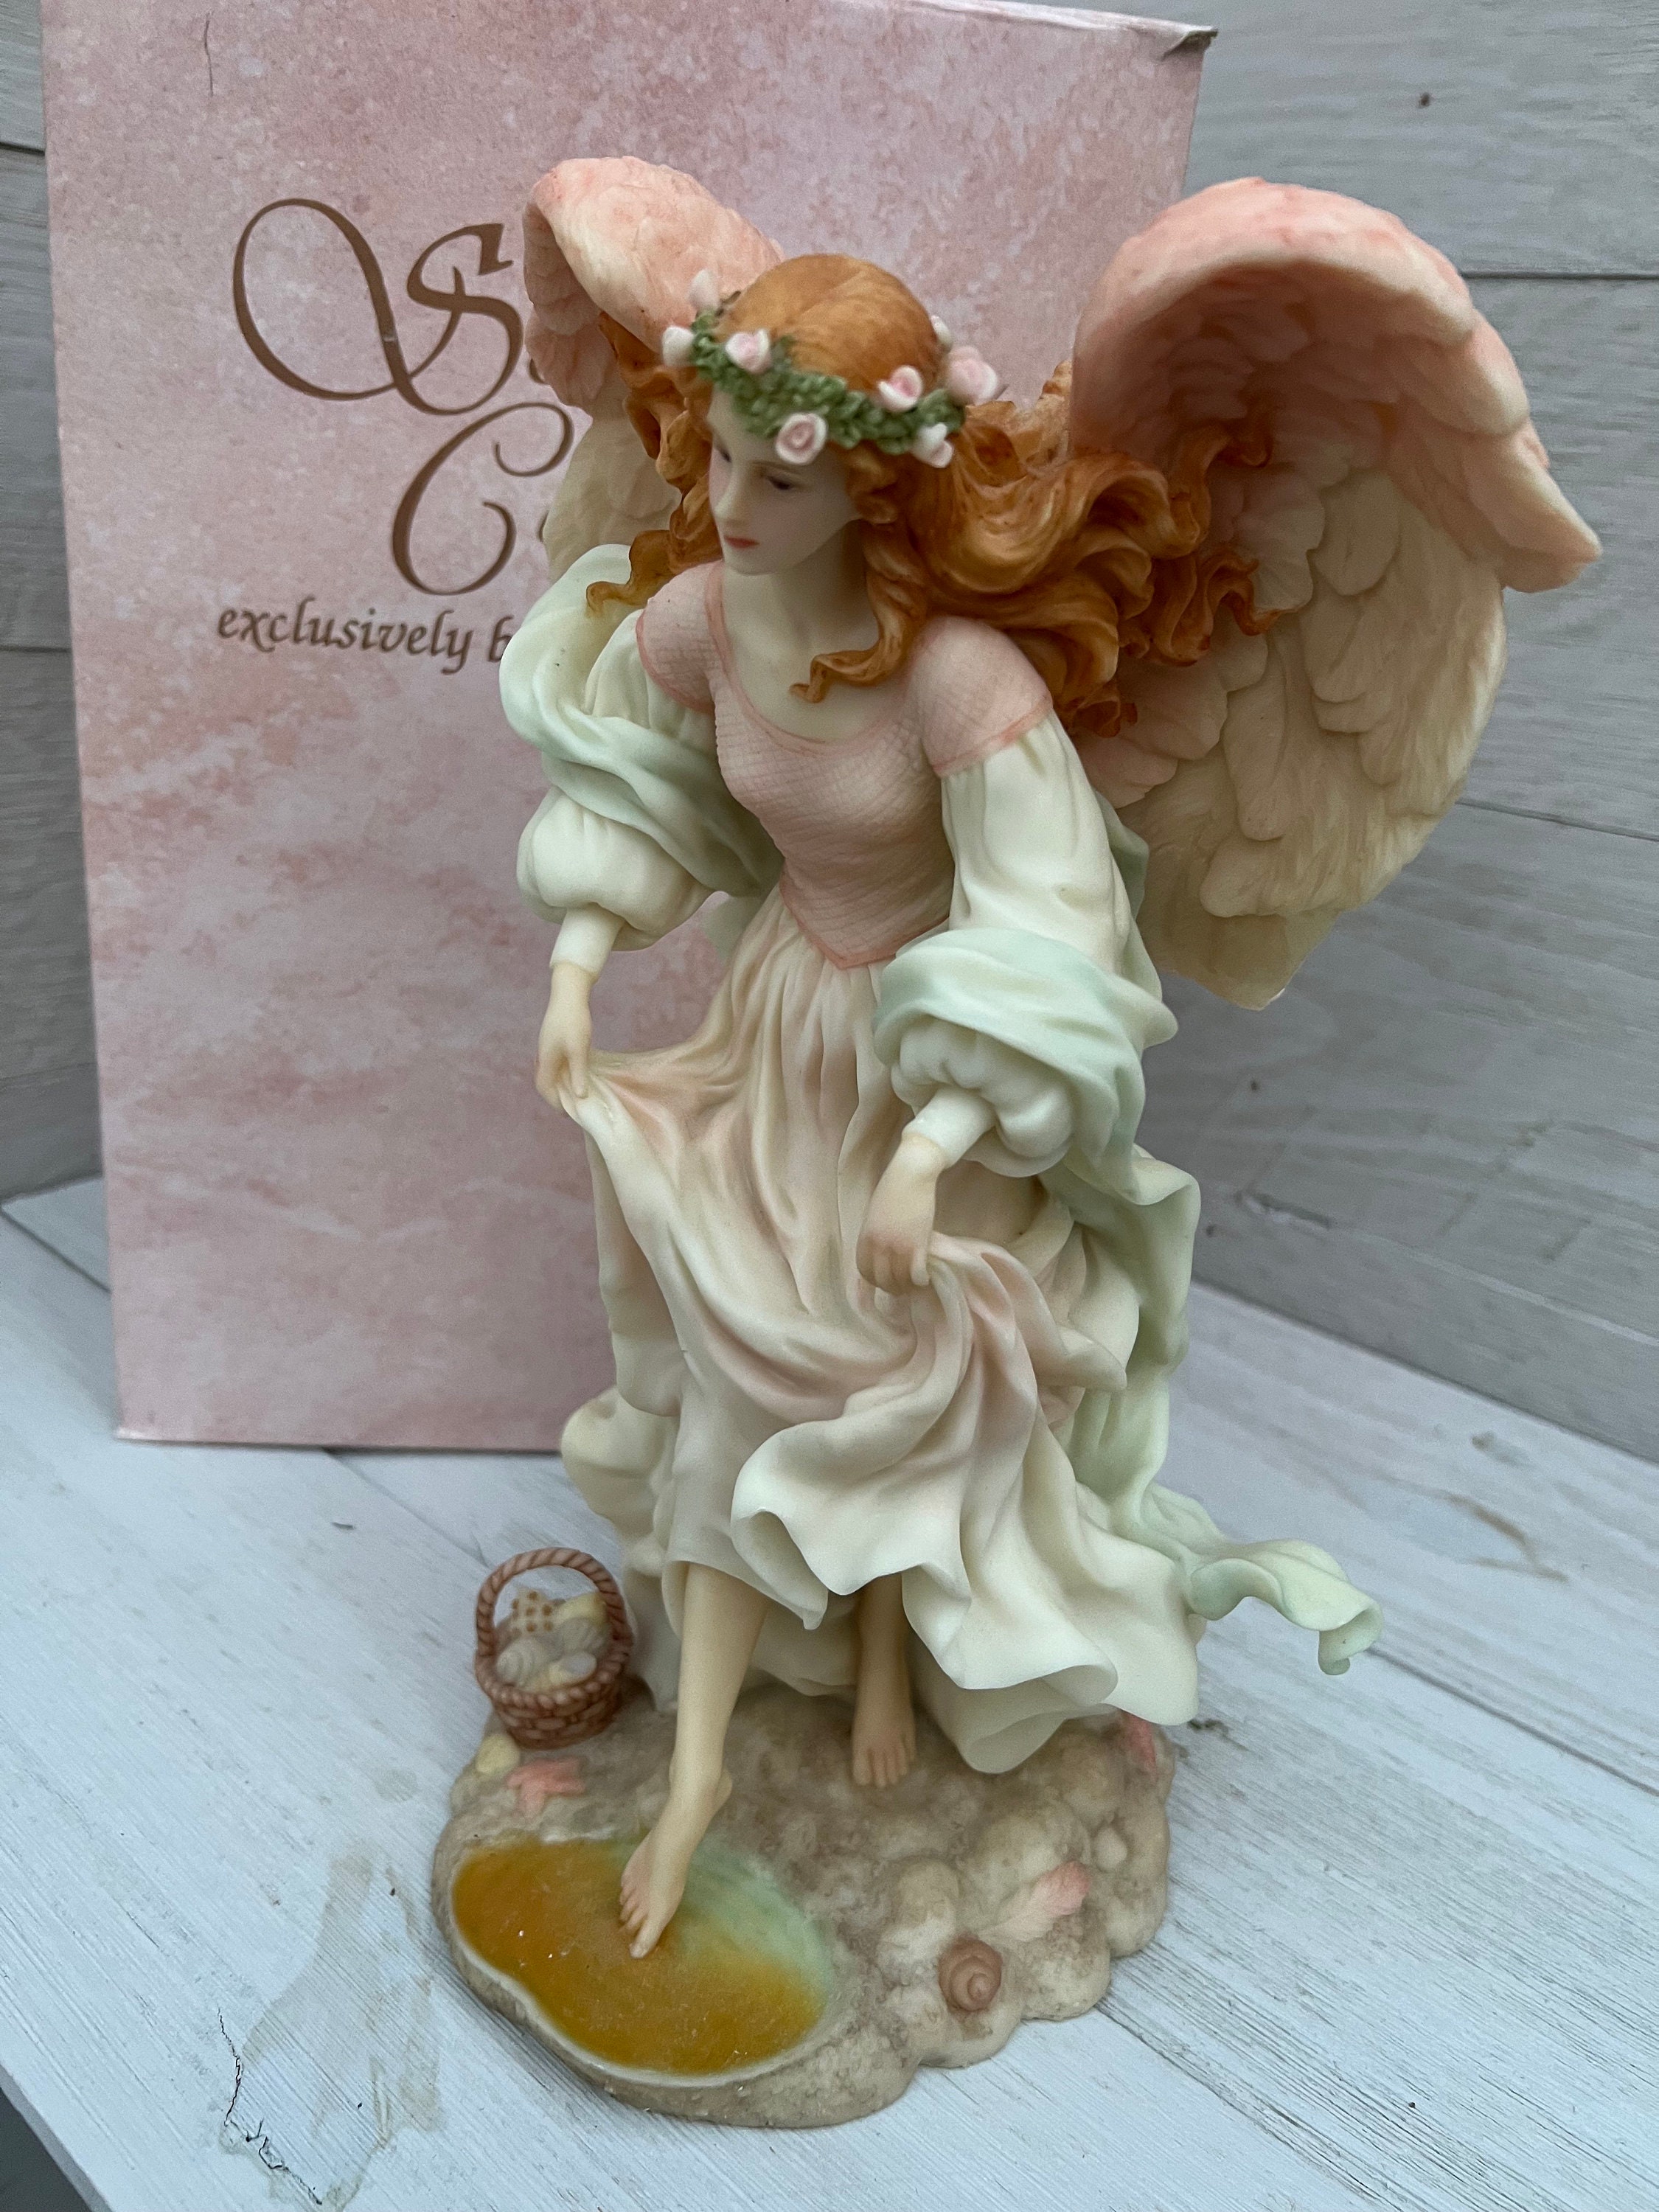 figurine ange gothique seraphin